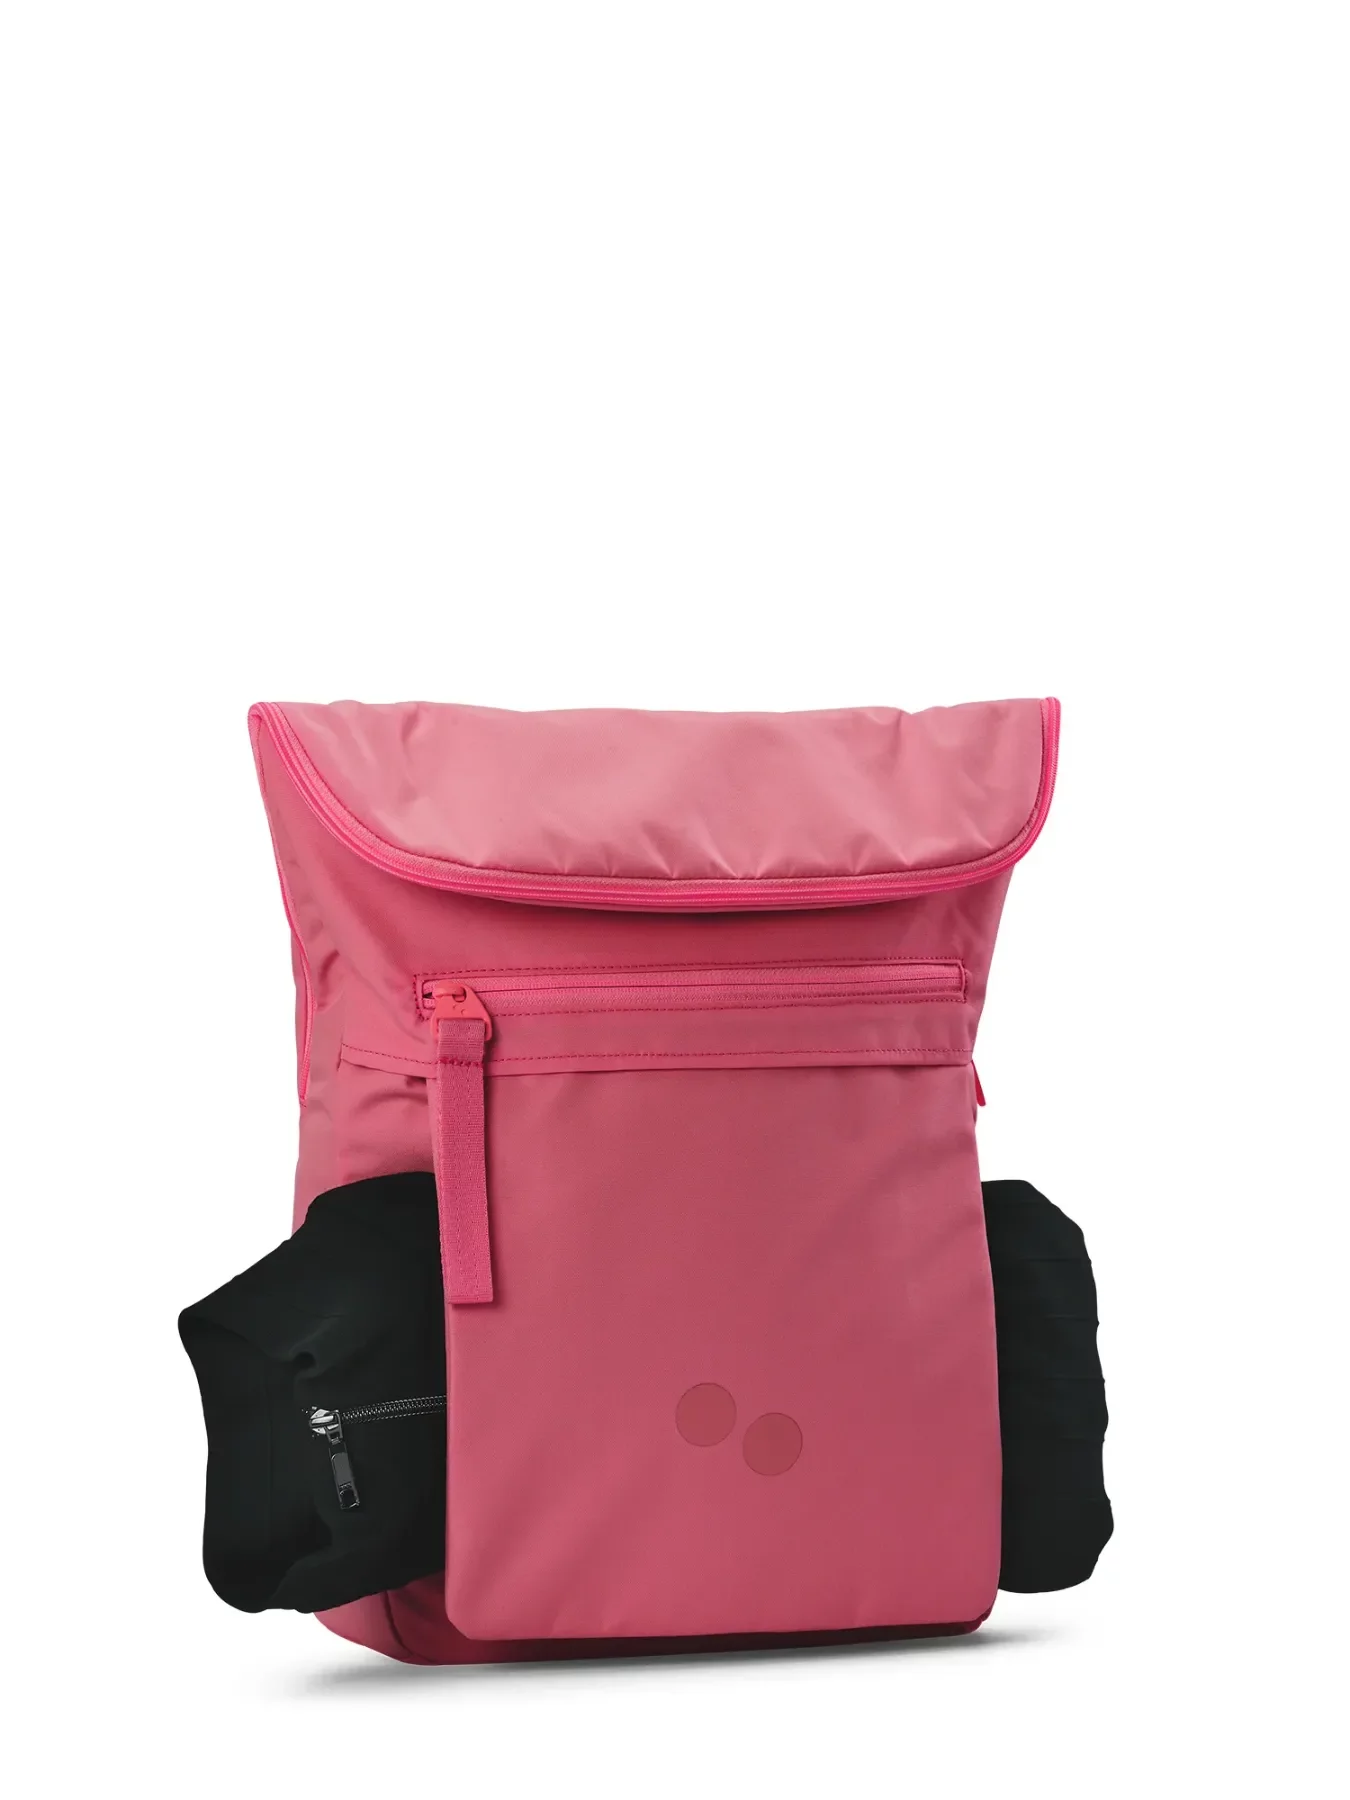 pinqponq Backpack KLAK - Watermelon Pink 7